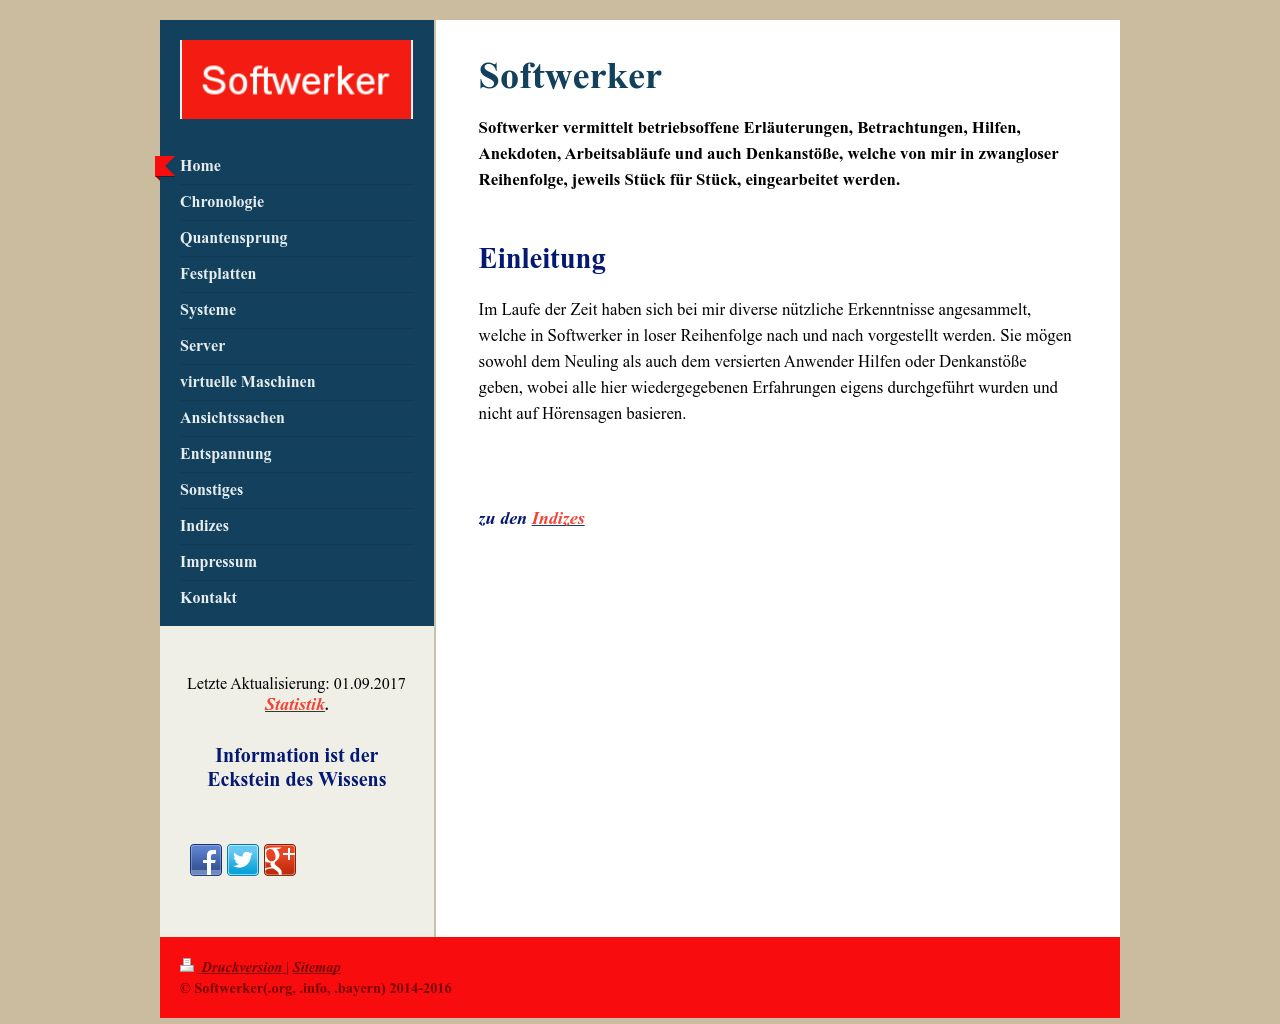 Image site softwerker.info in 1280x1024